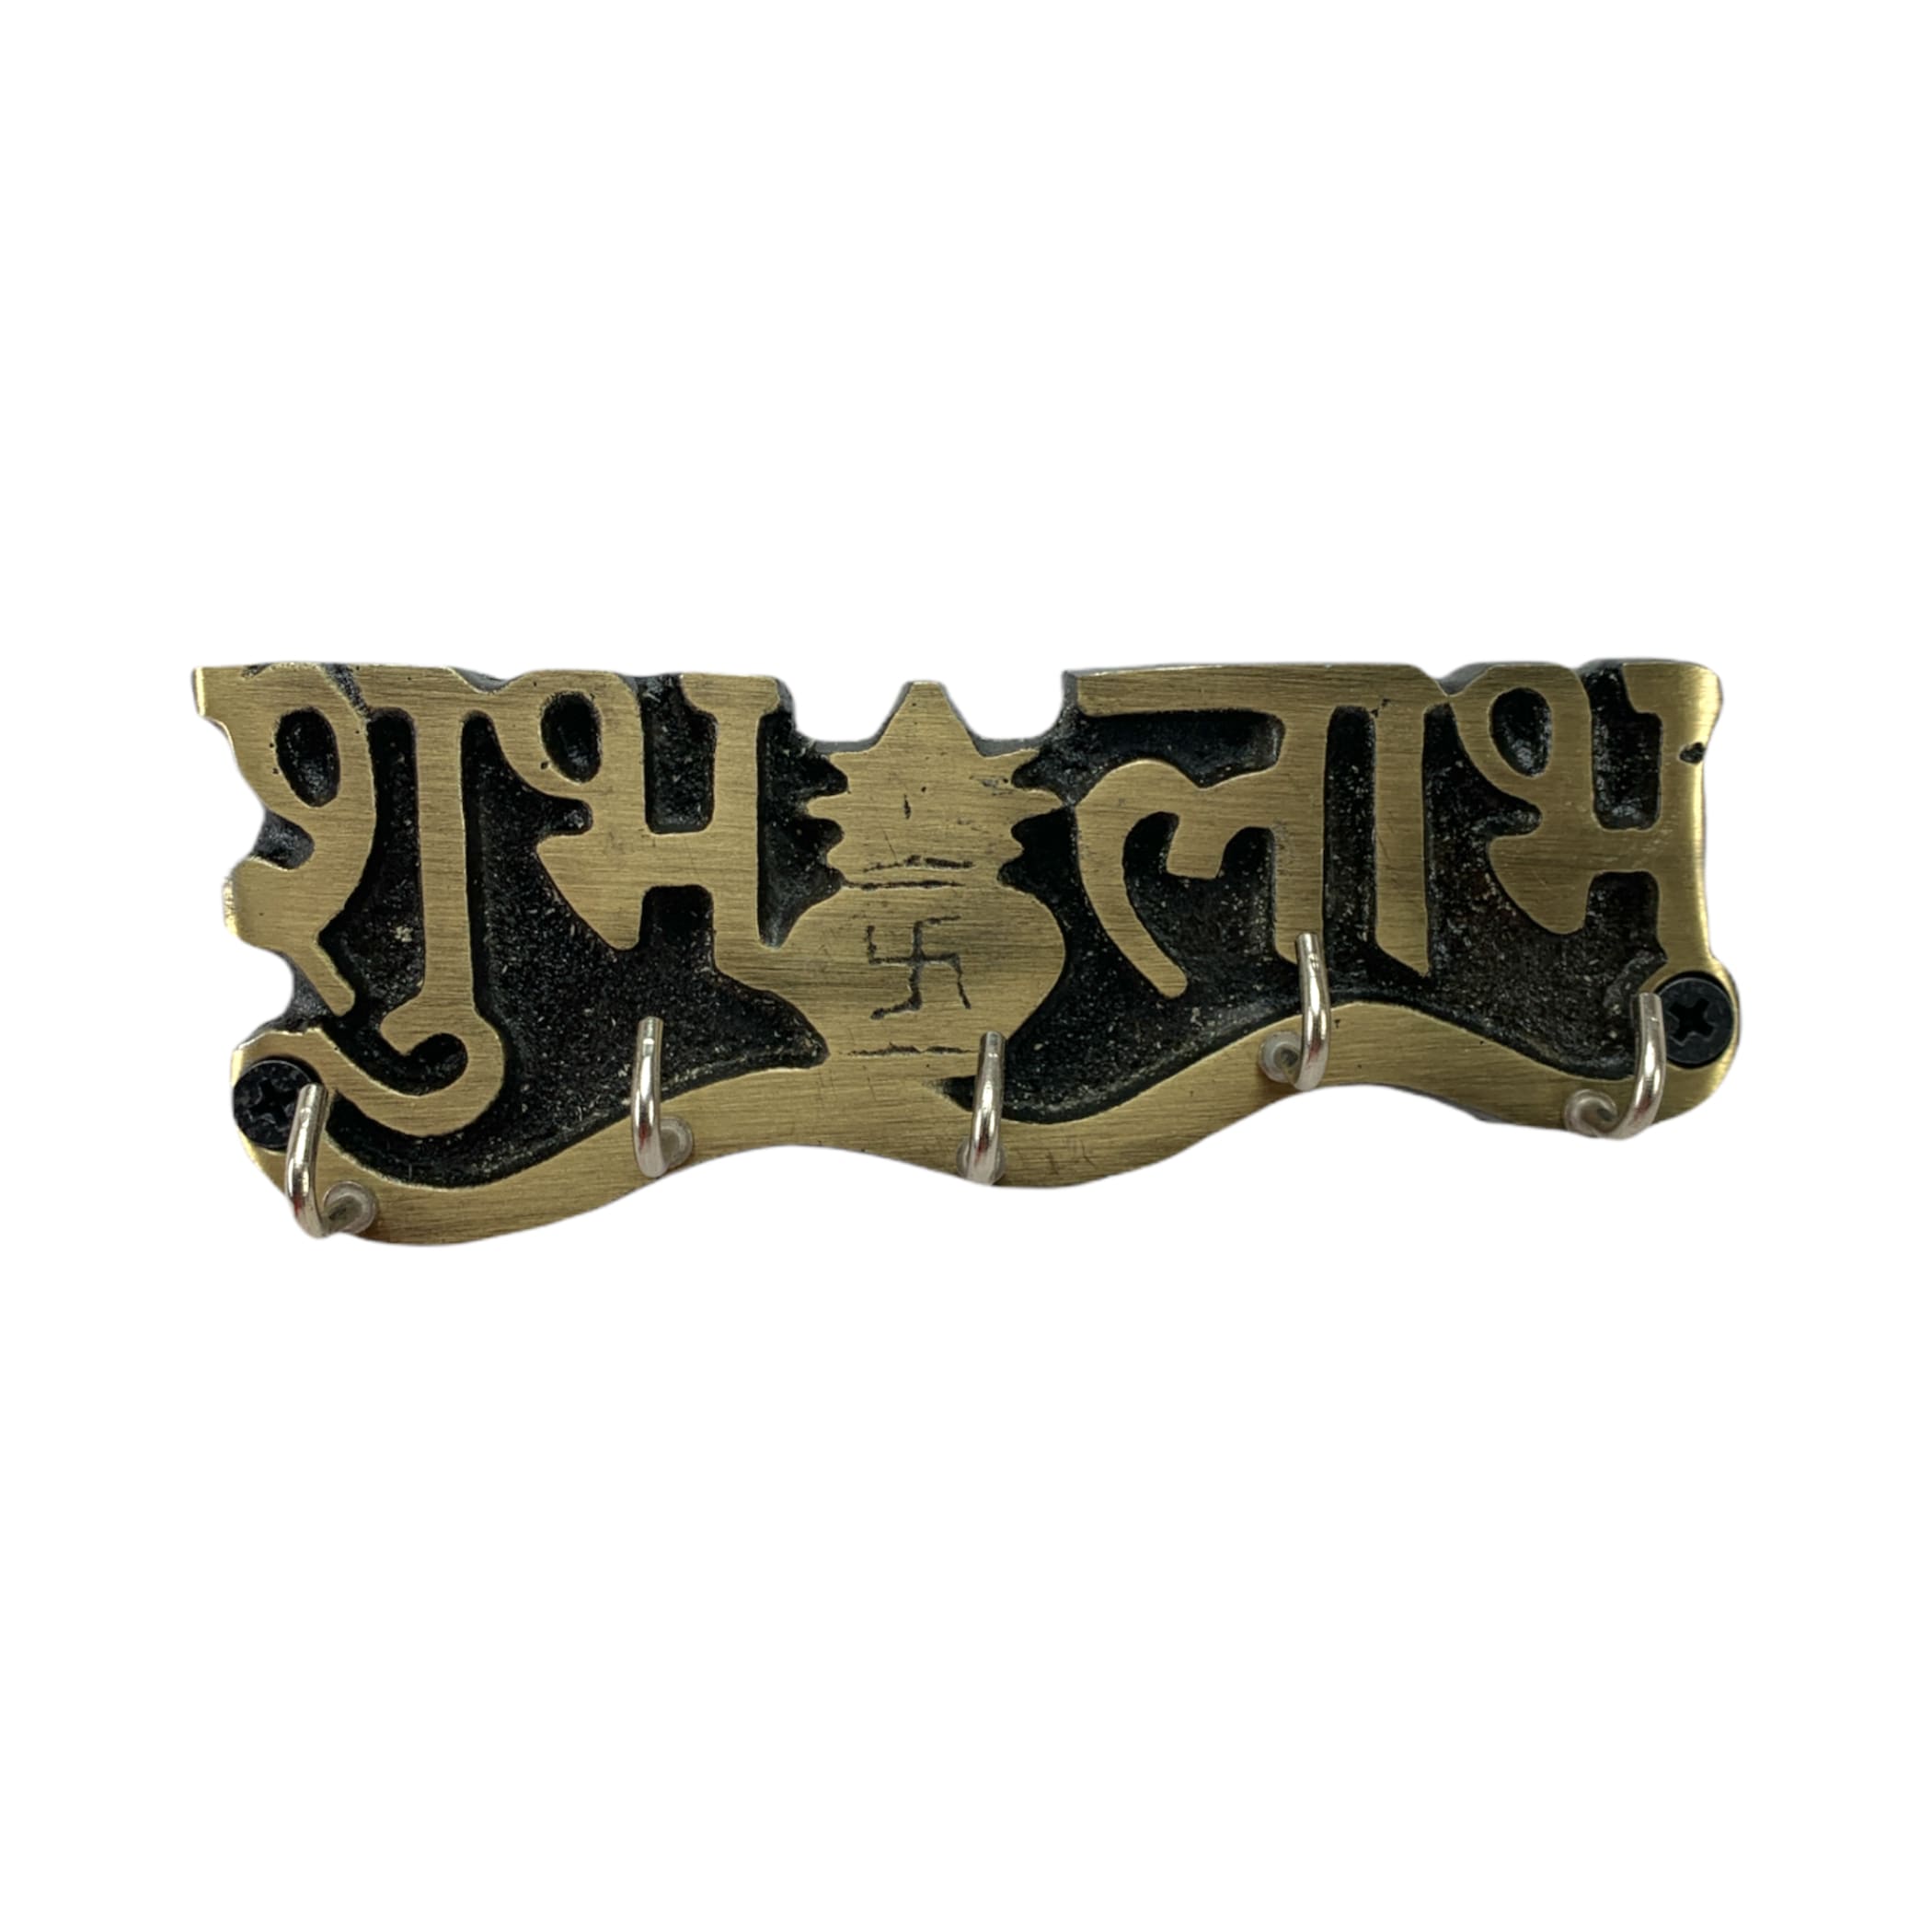 Shubh labh key holder decorative and jewelry organiser